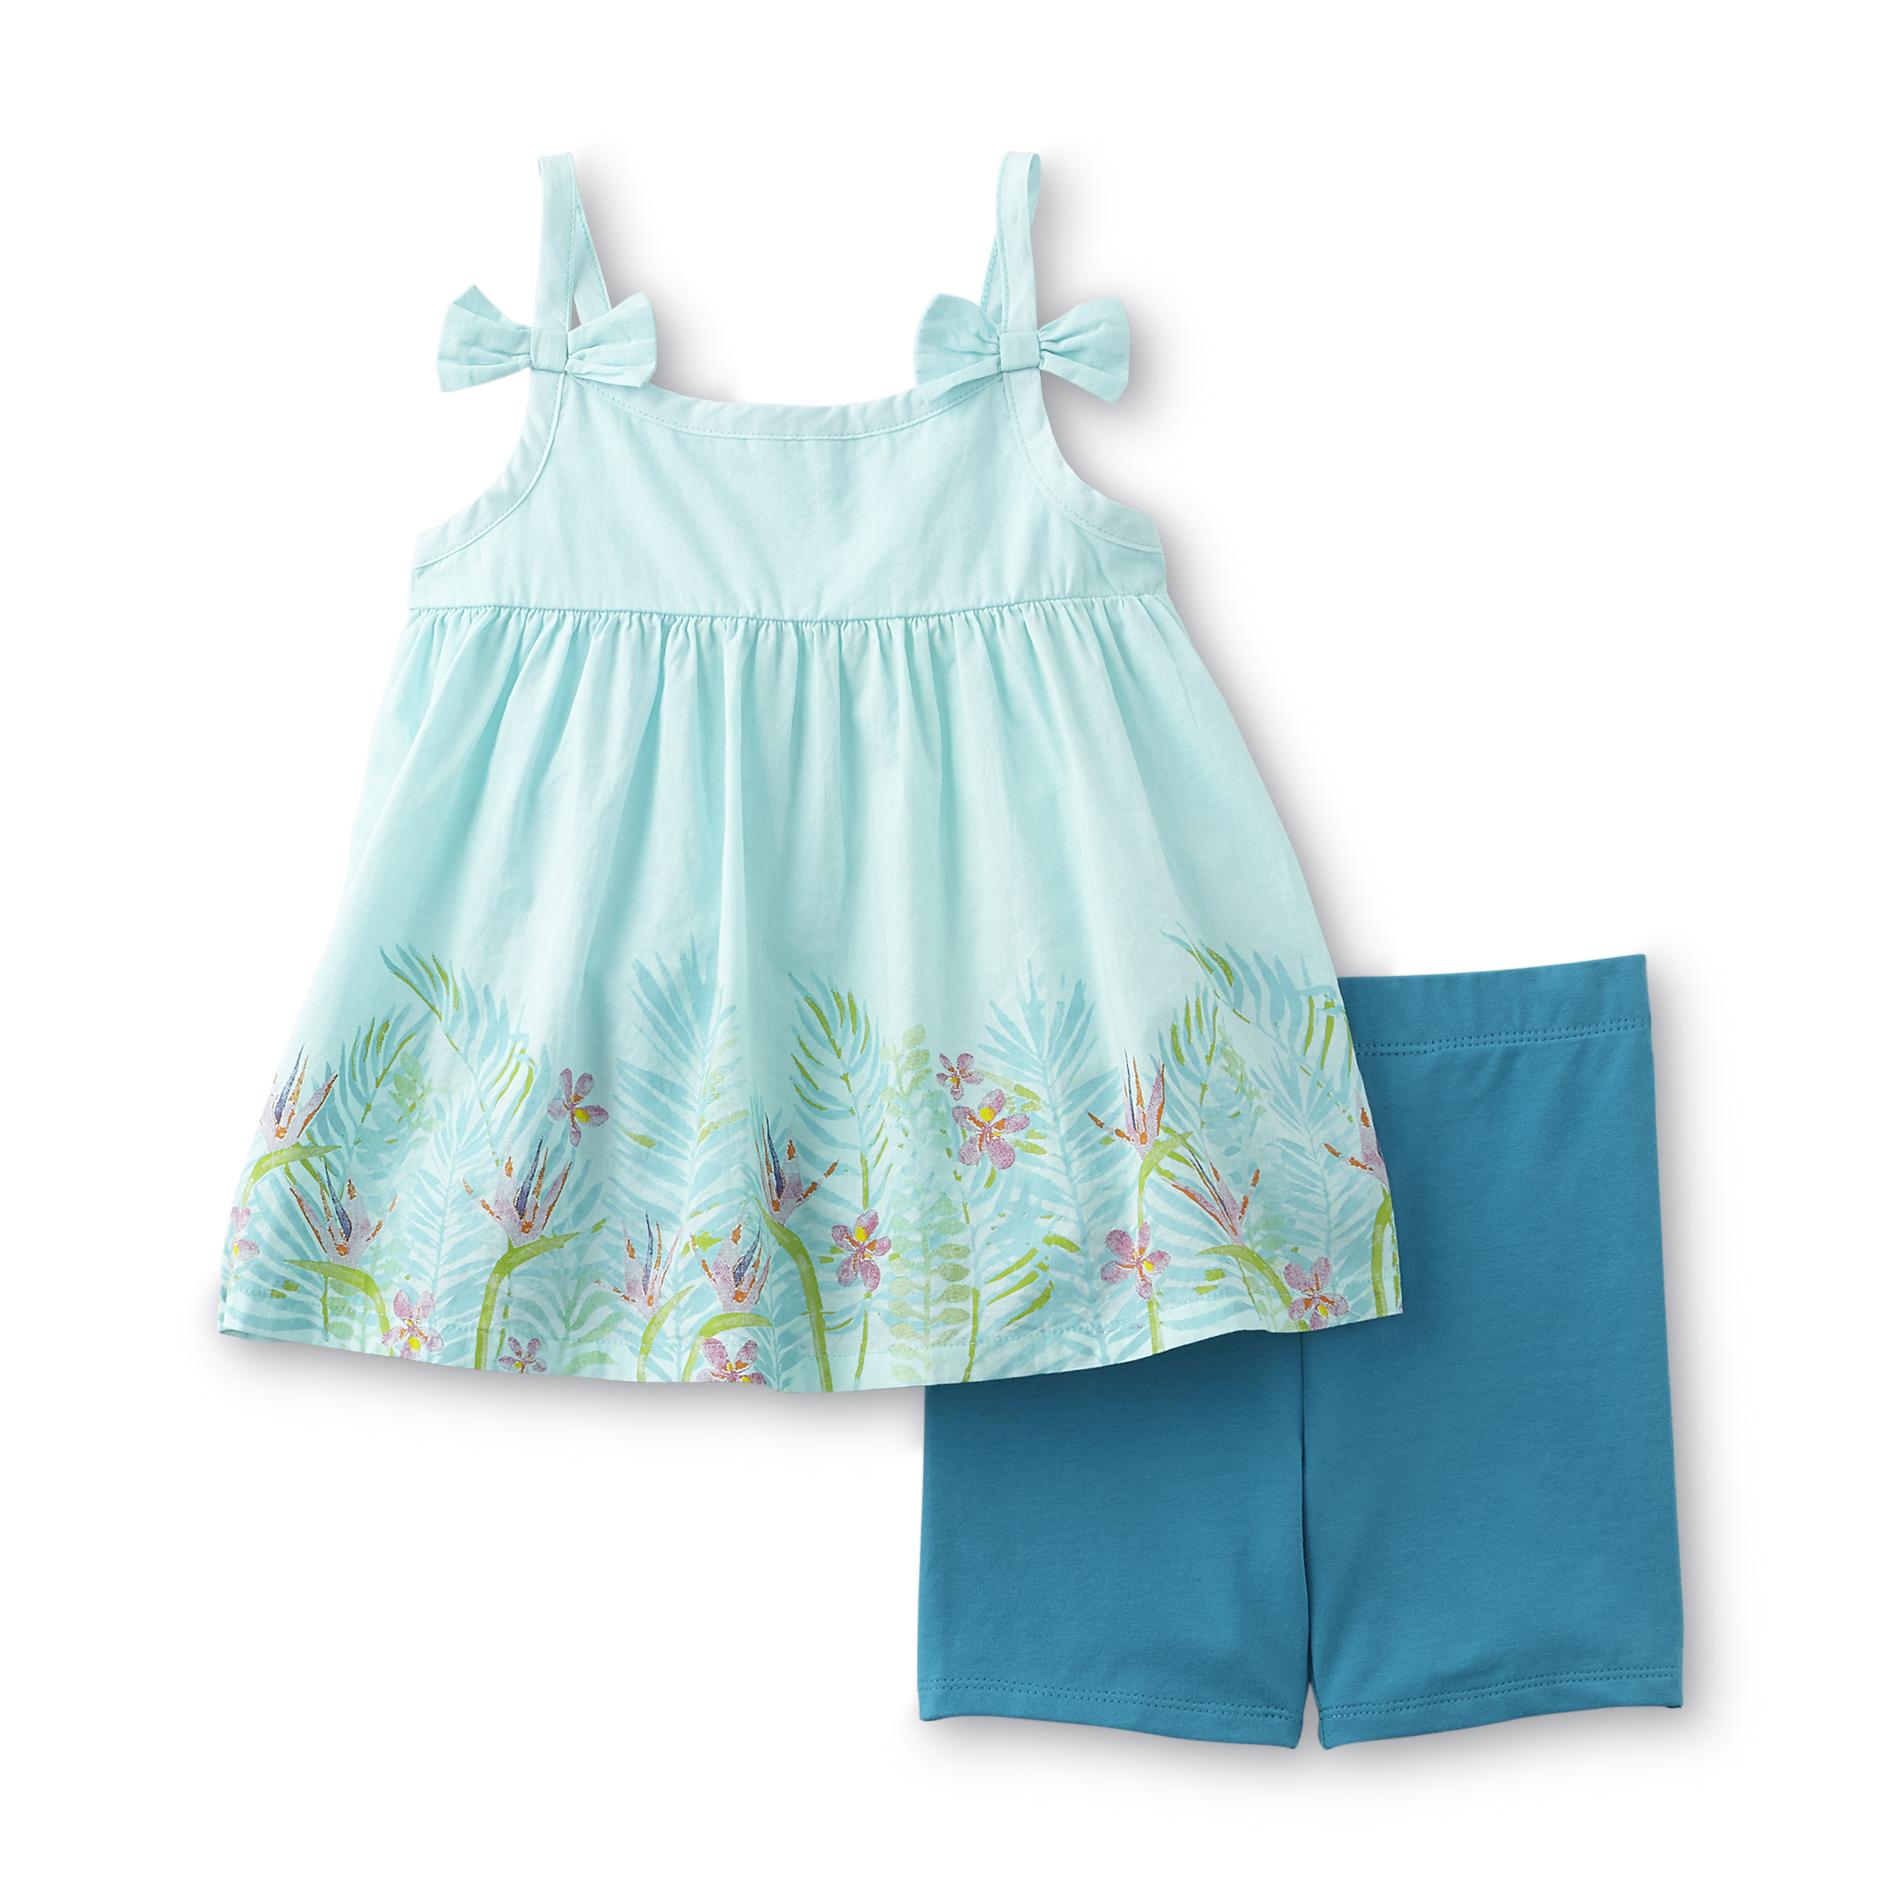 Toughskins Infant & Toddler Girl's Tunic & Shorts - Tropical